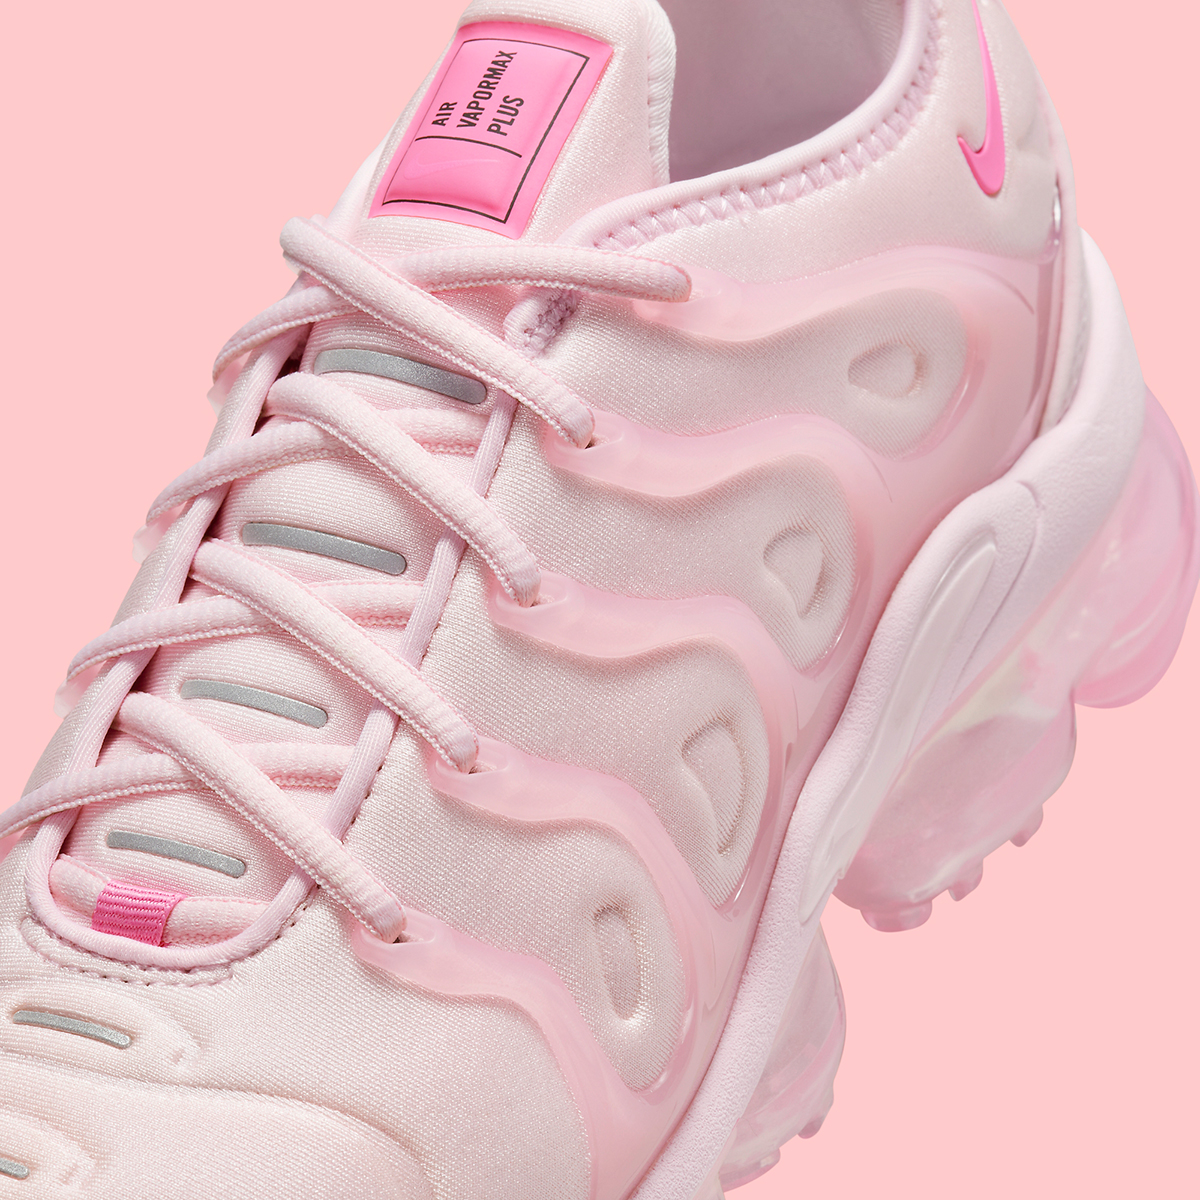 Nike's Vapormax Plus Gets A Barbie Pink-Update | Sneaker News